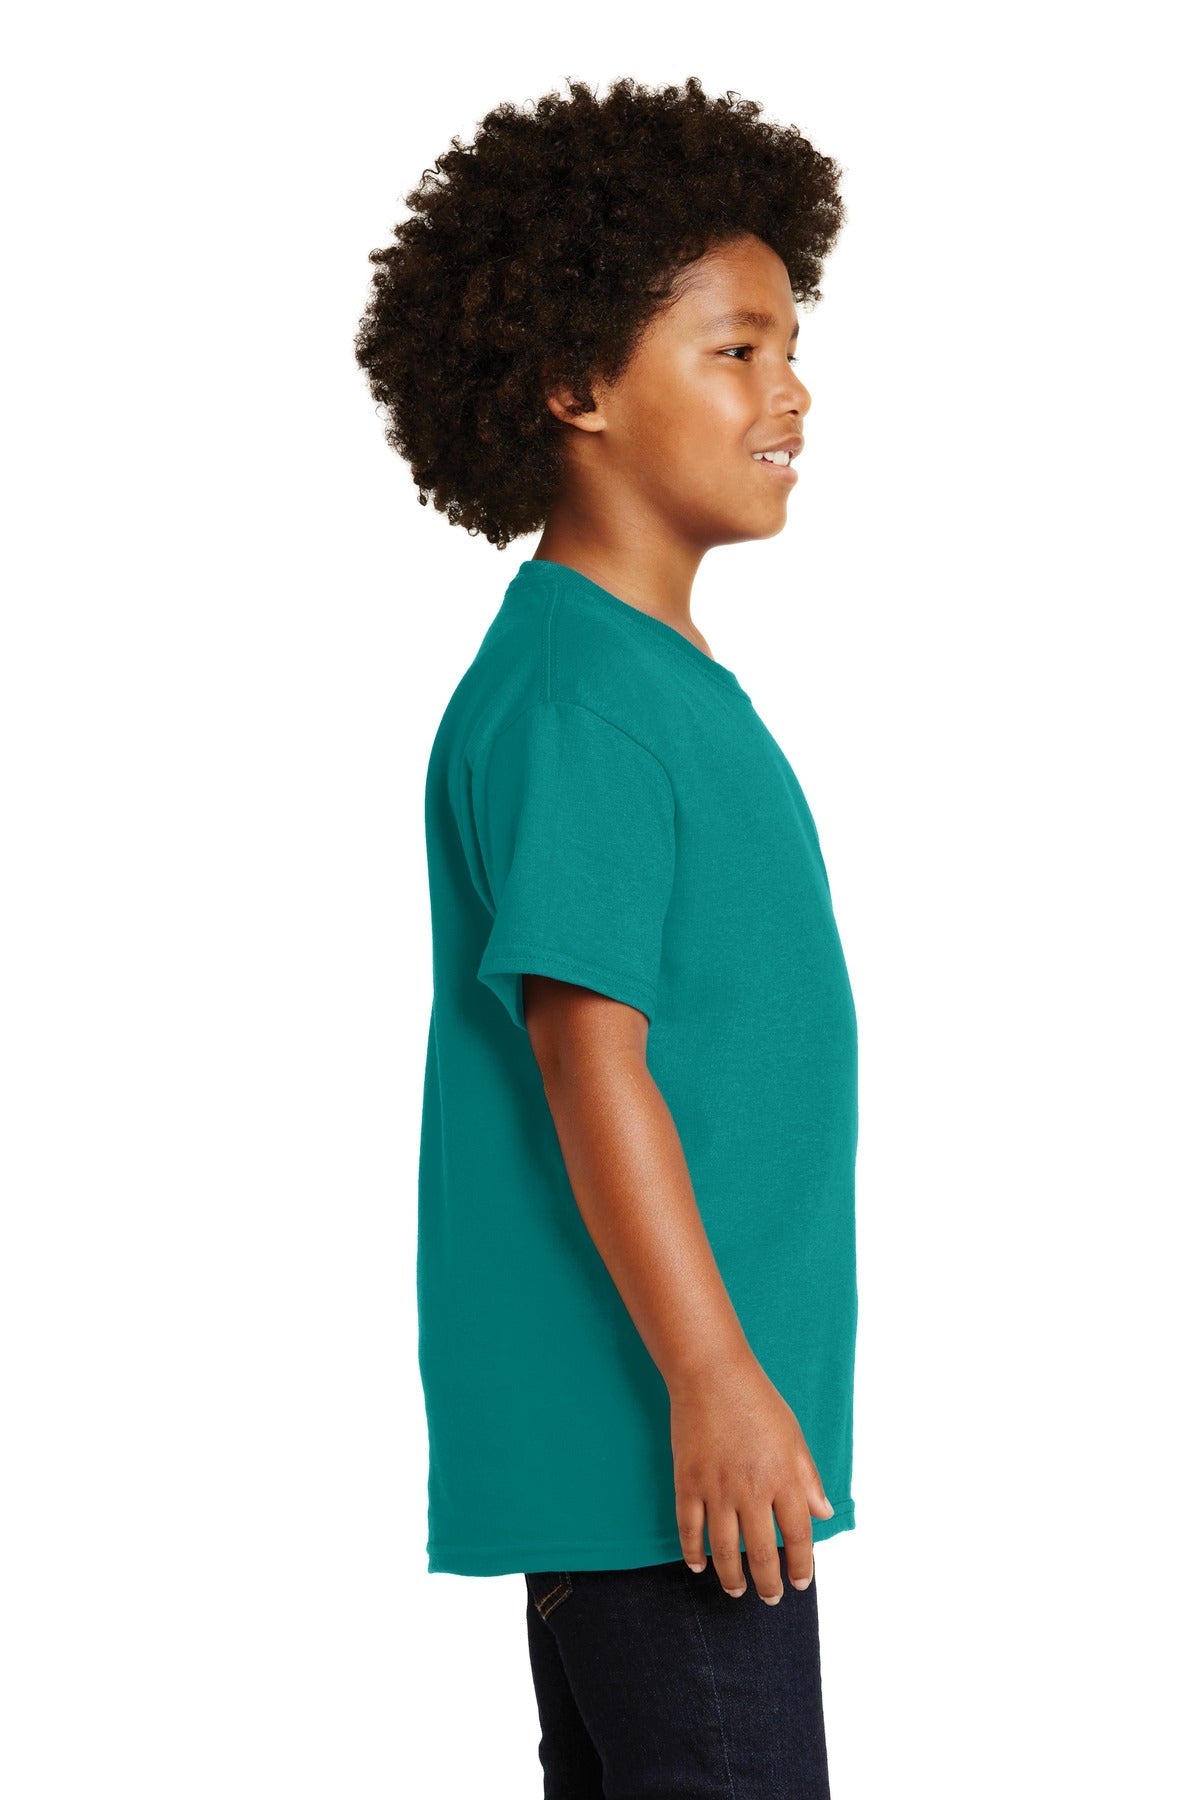 Gildan® - Youth Ultra Cotton®100% US Cotton T-Shirt. 2000B [Jade Dome] - DFW Impression